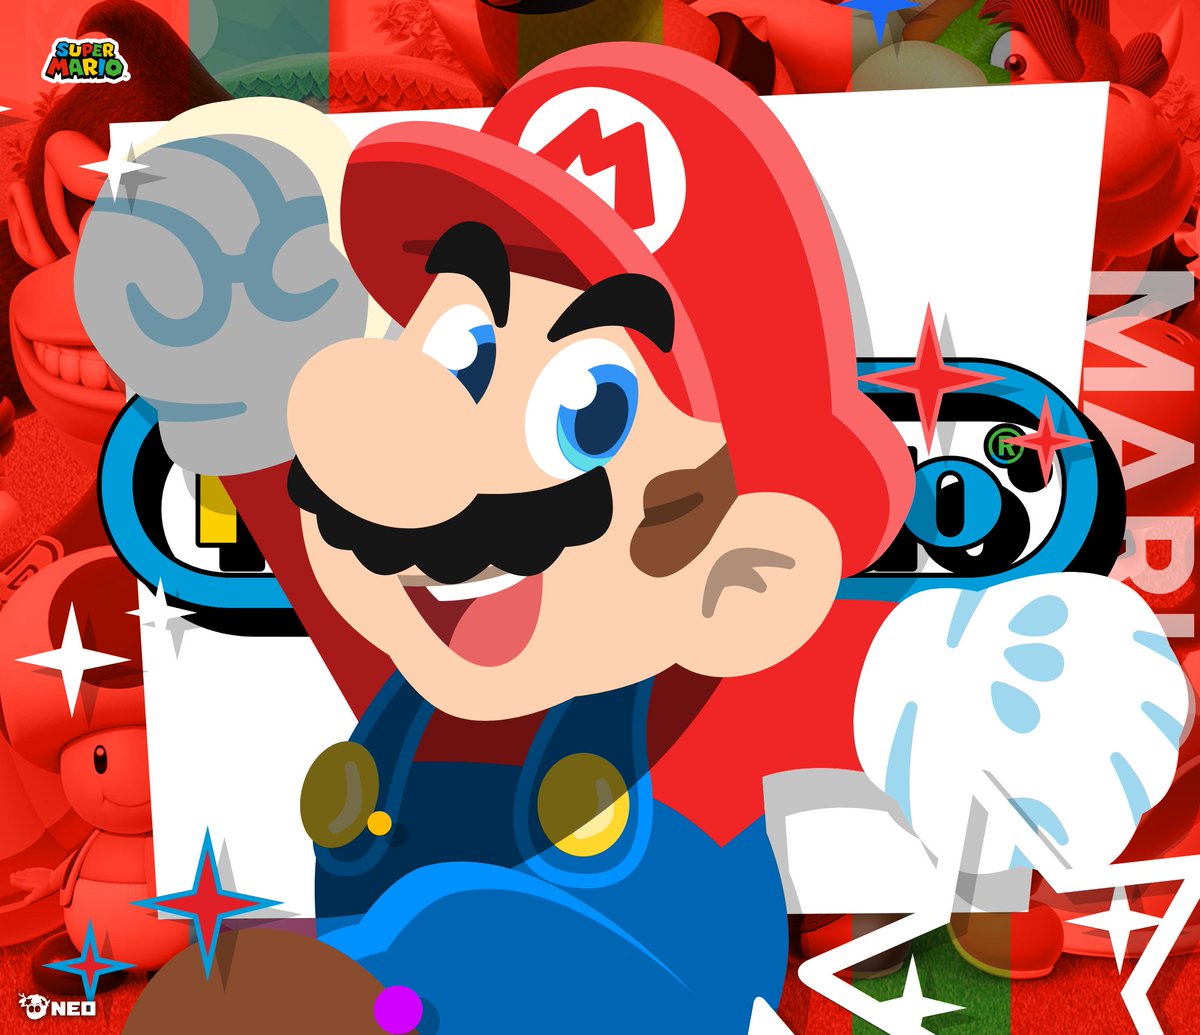 'It's-a-me, Mario!' ❤️
#nintendo #supermario #fanart #digitalart #linelessart #videogames